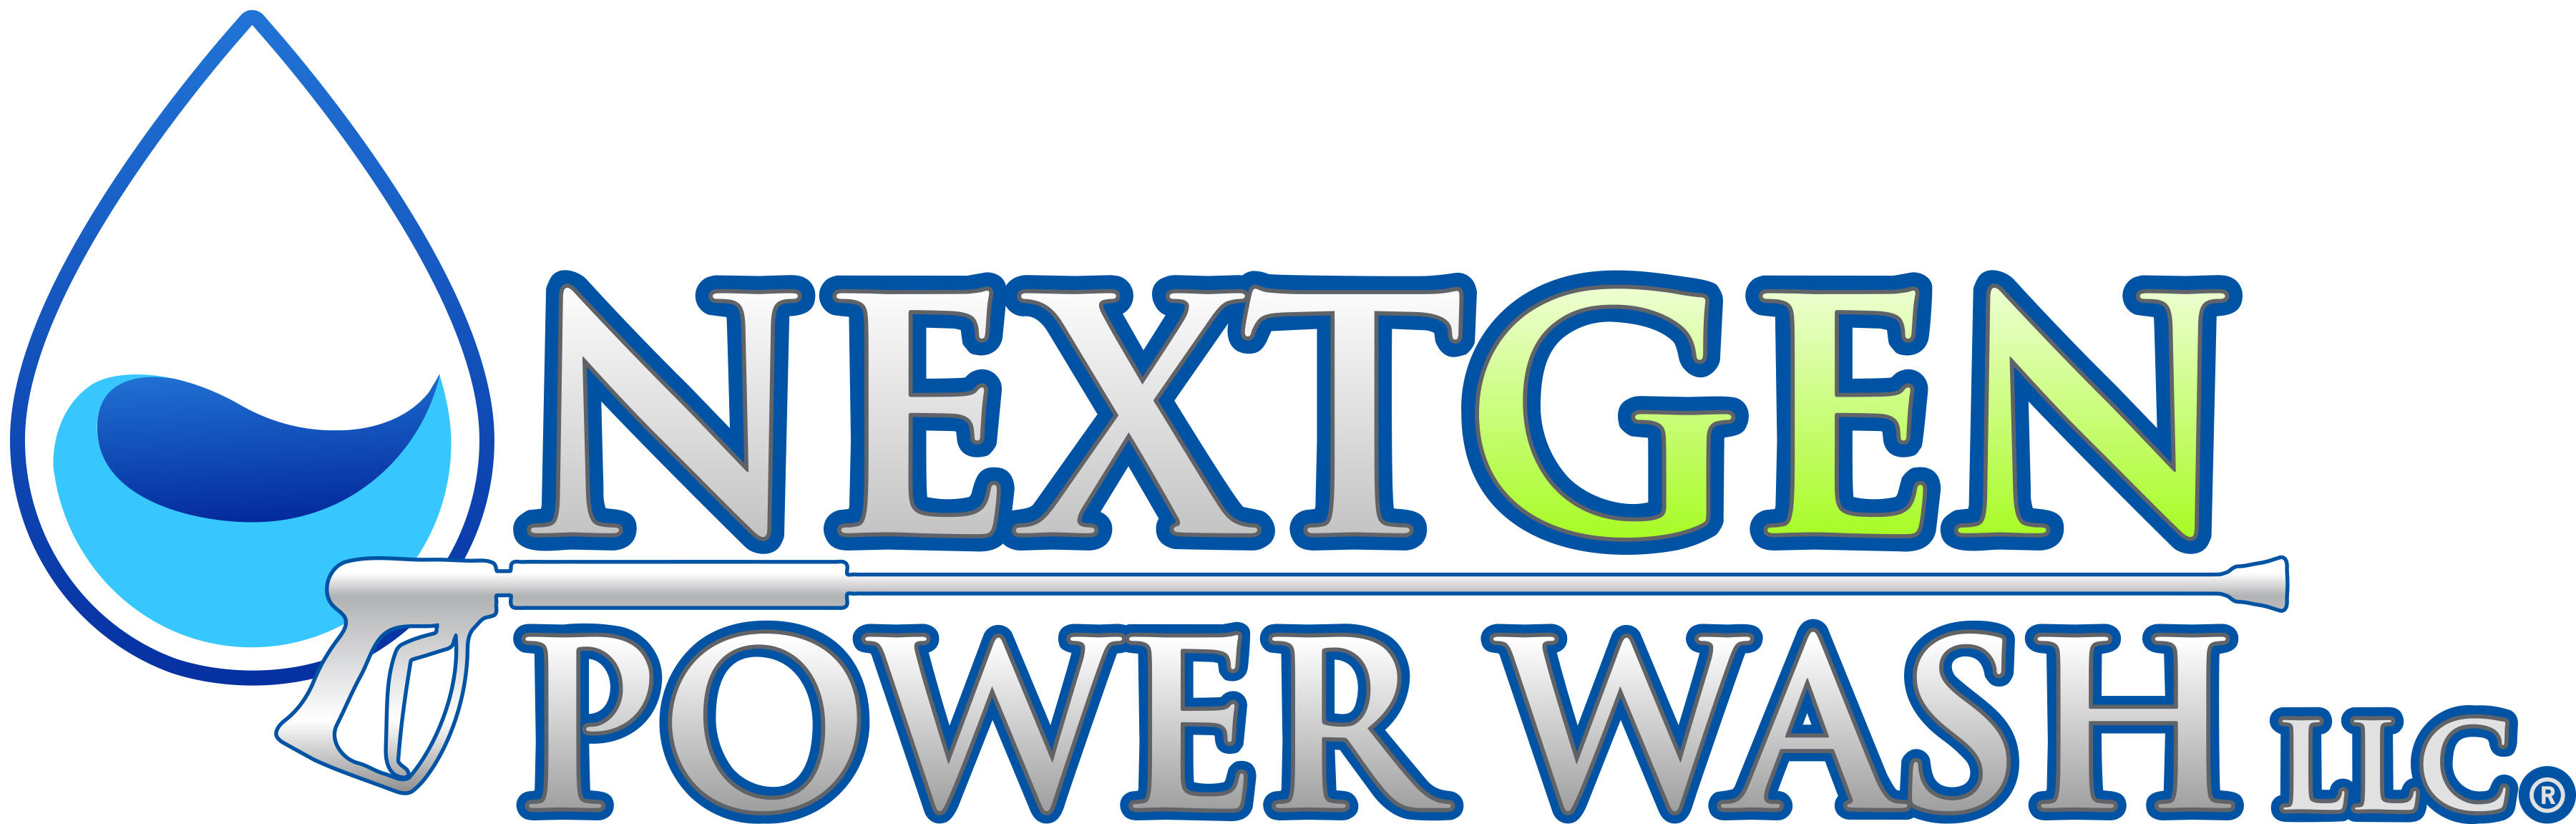 NextGen Power Wash LLC Logo Selinsgrove Pennsylvania